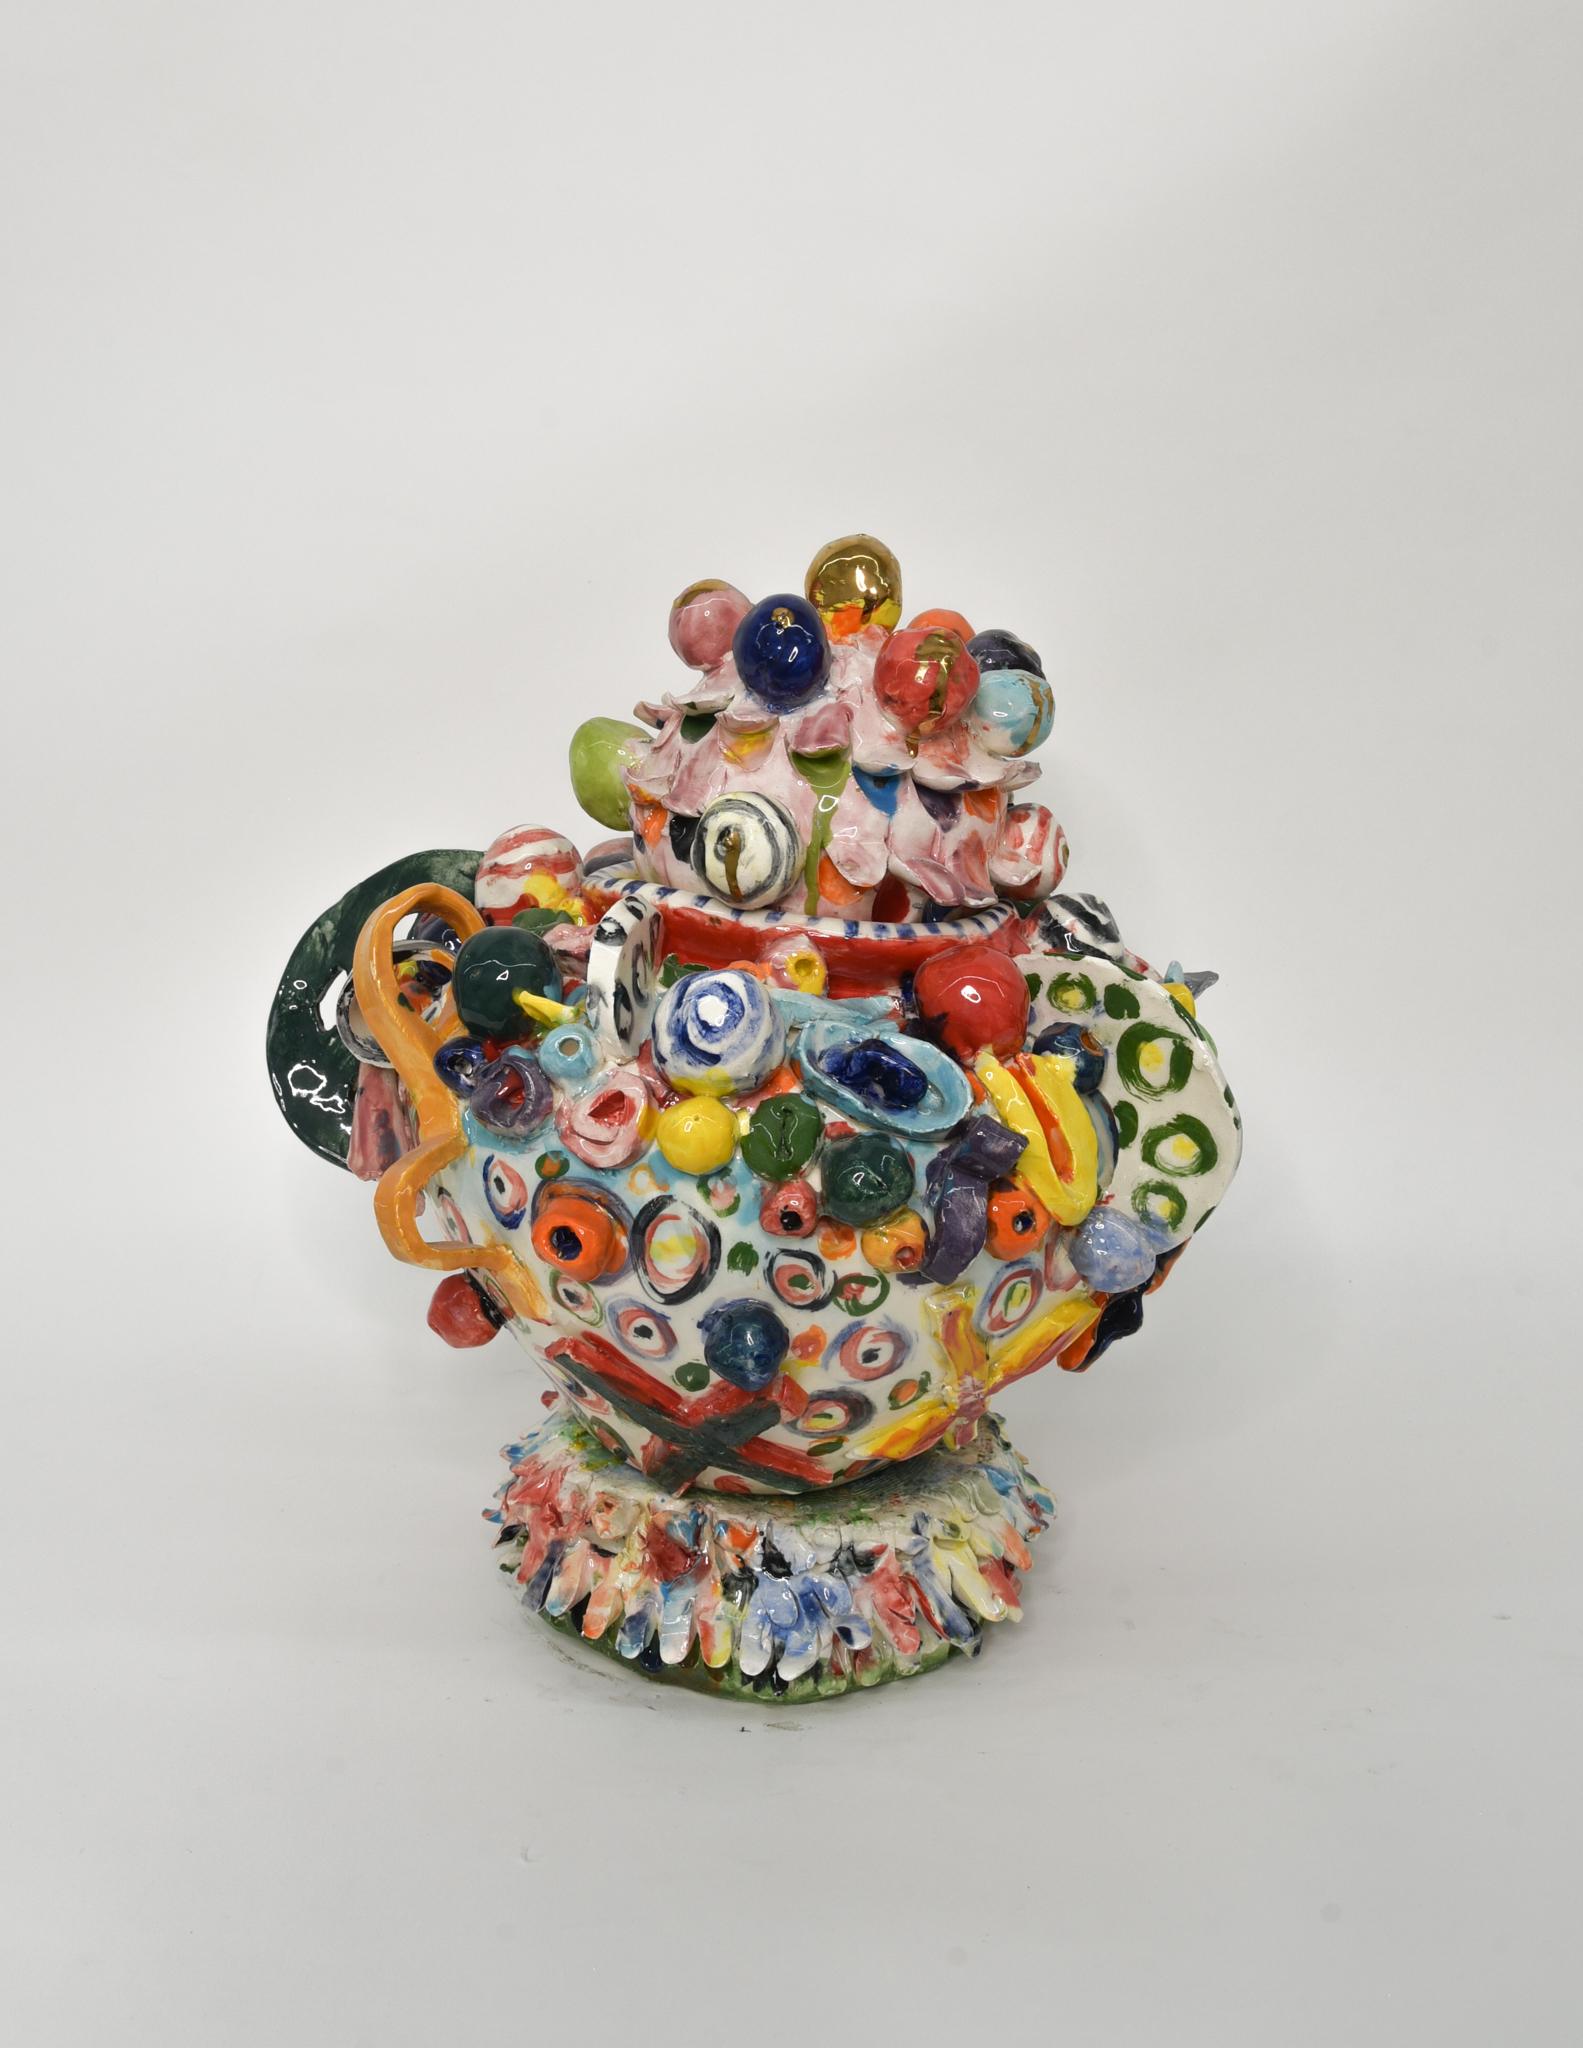 Charo Oquet Still-Life Sculpture - Untitled XII. Glazed ceramic abstract jar sculpture